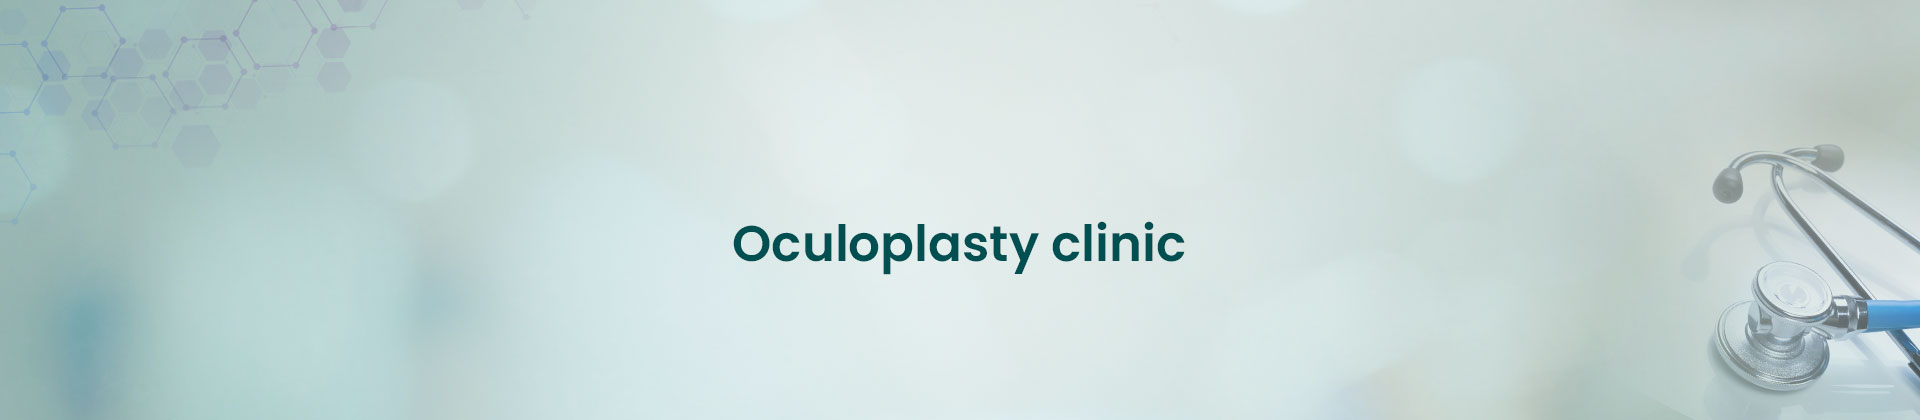 Oculoplasty clinic